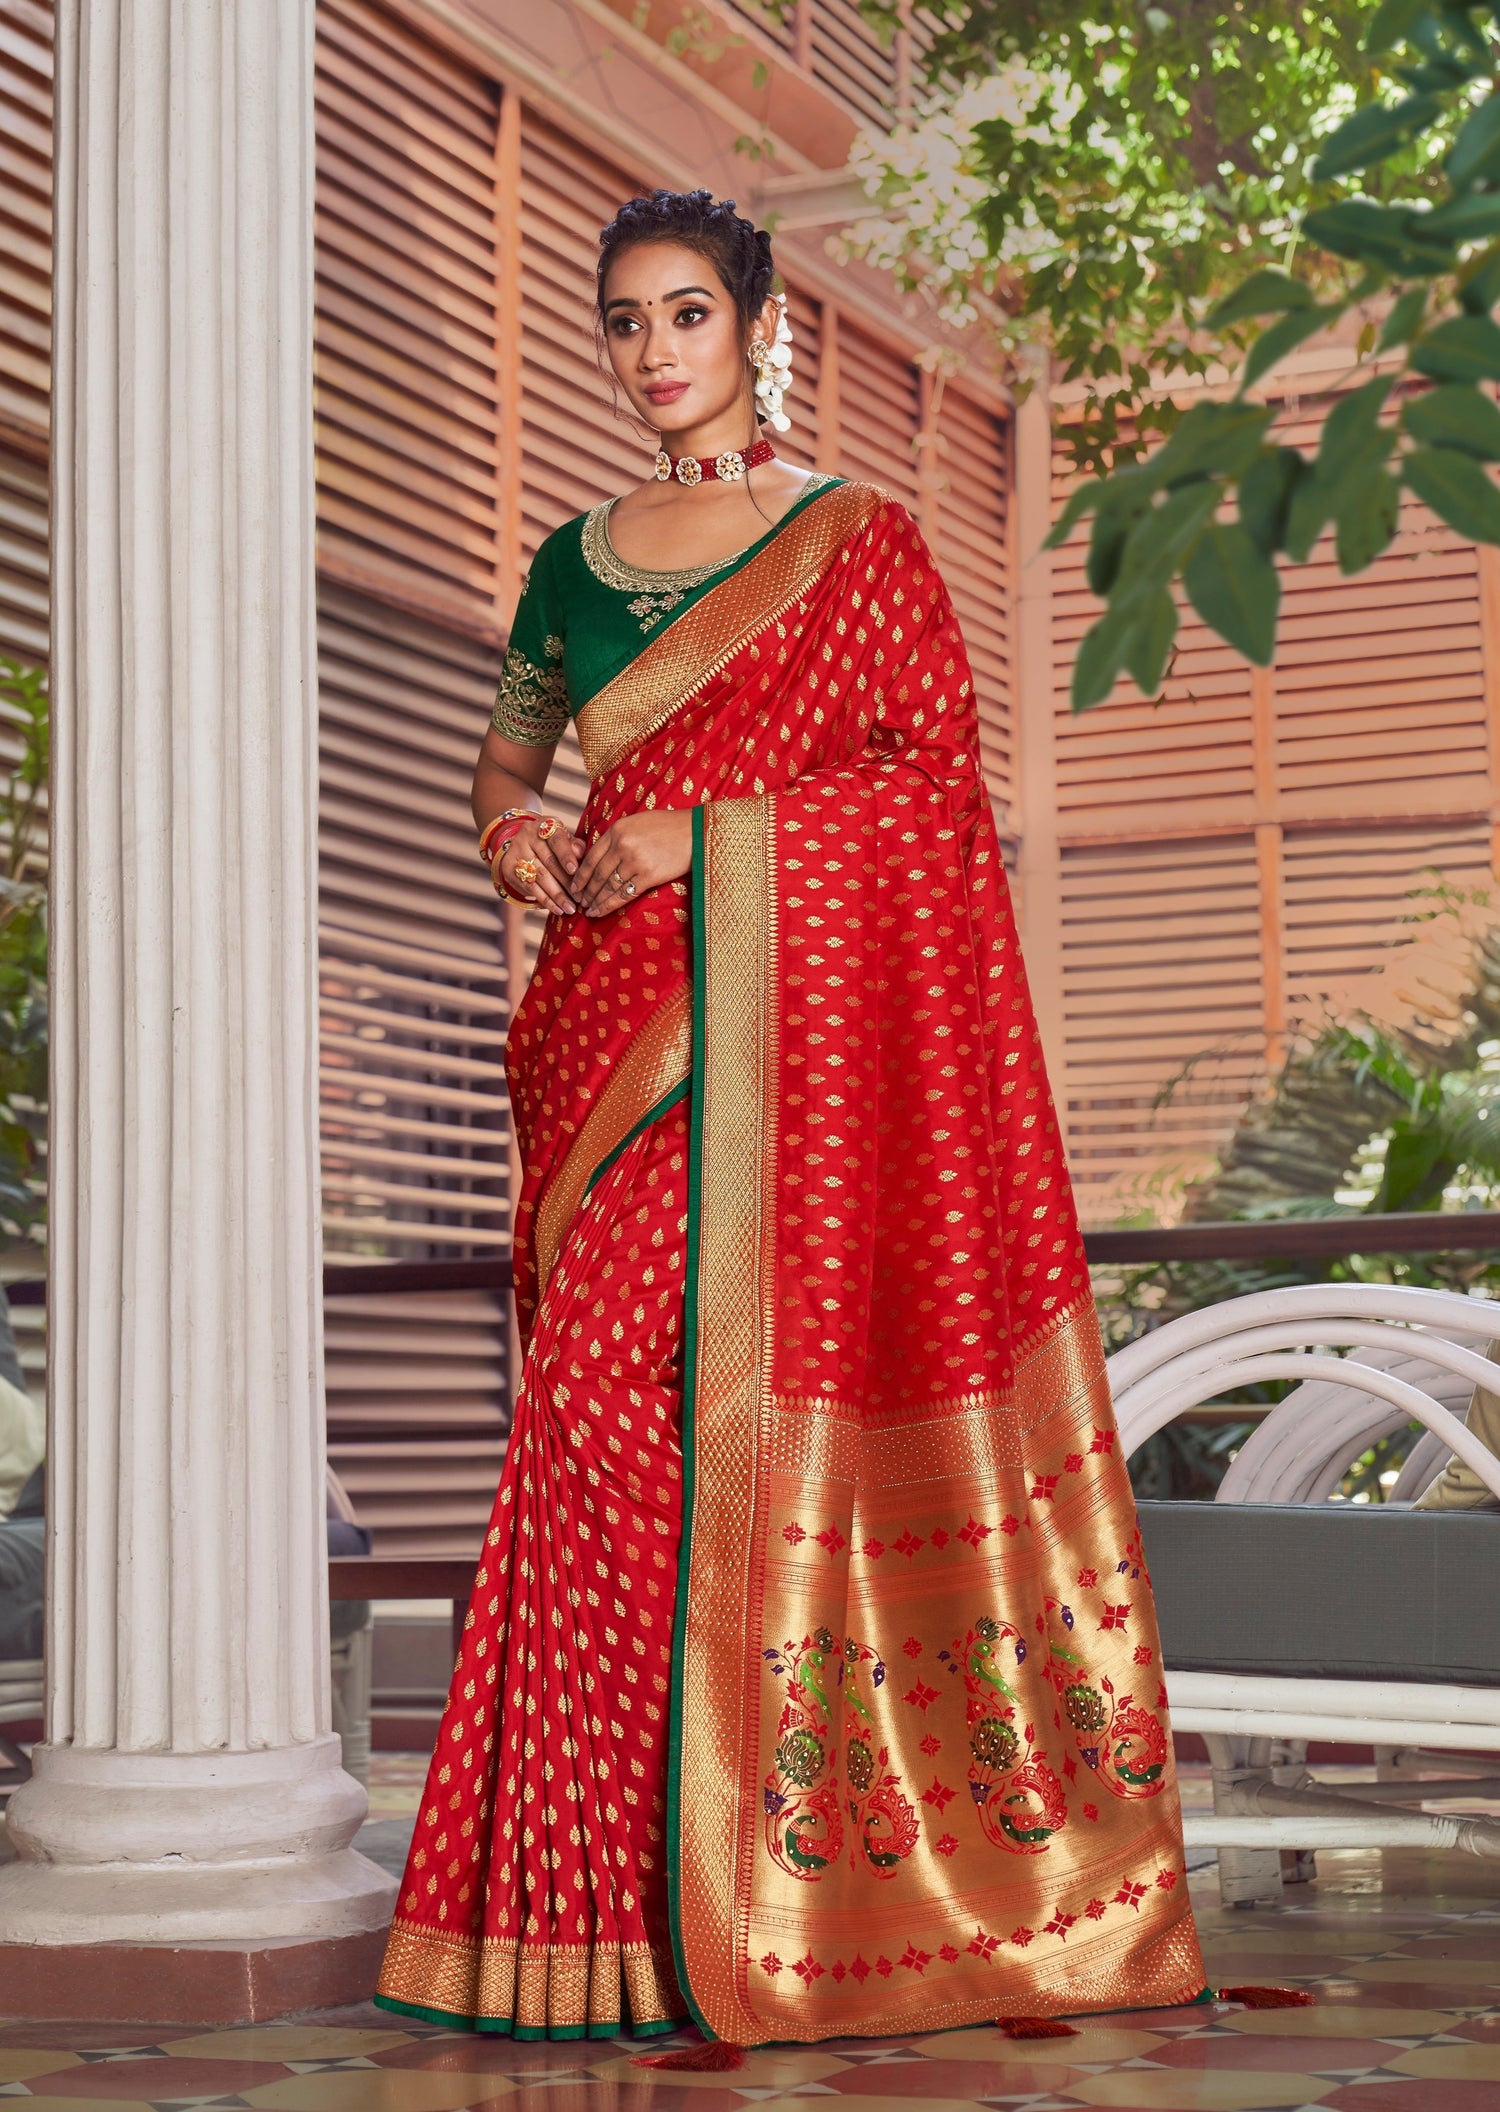 Paithani wedding sarees with price